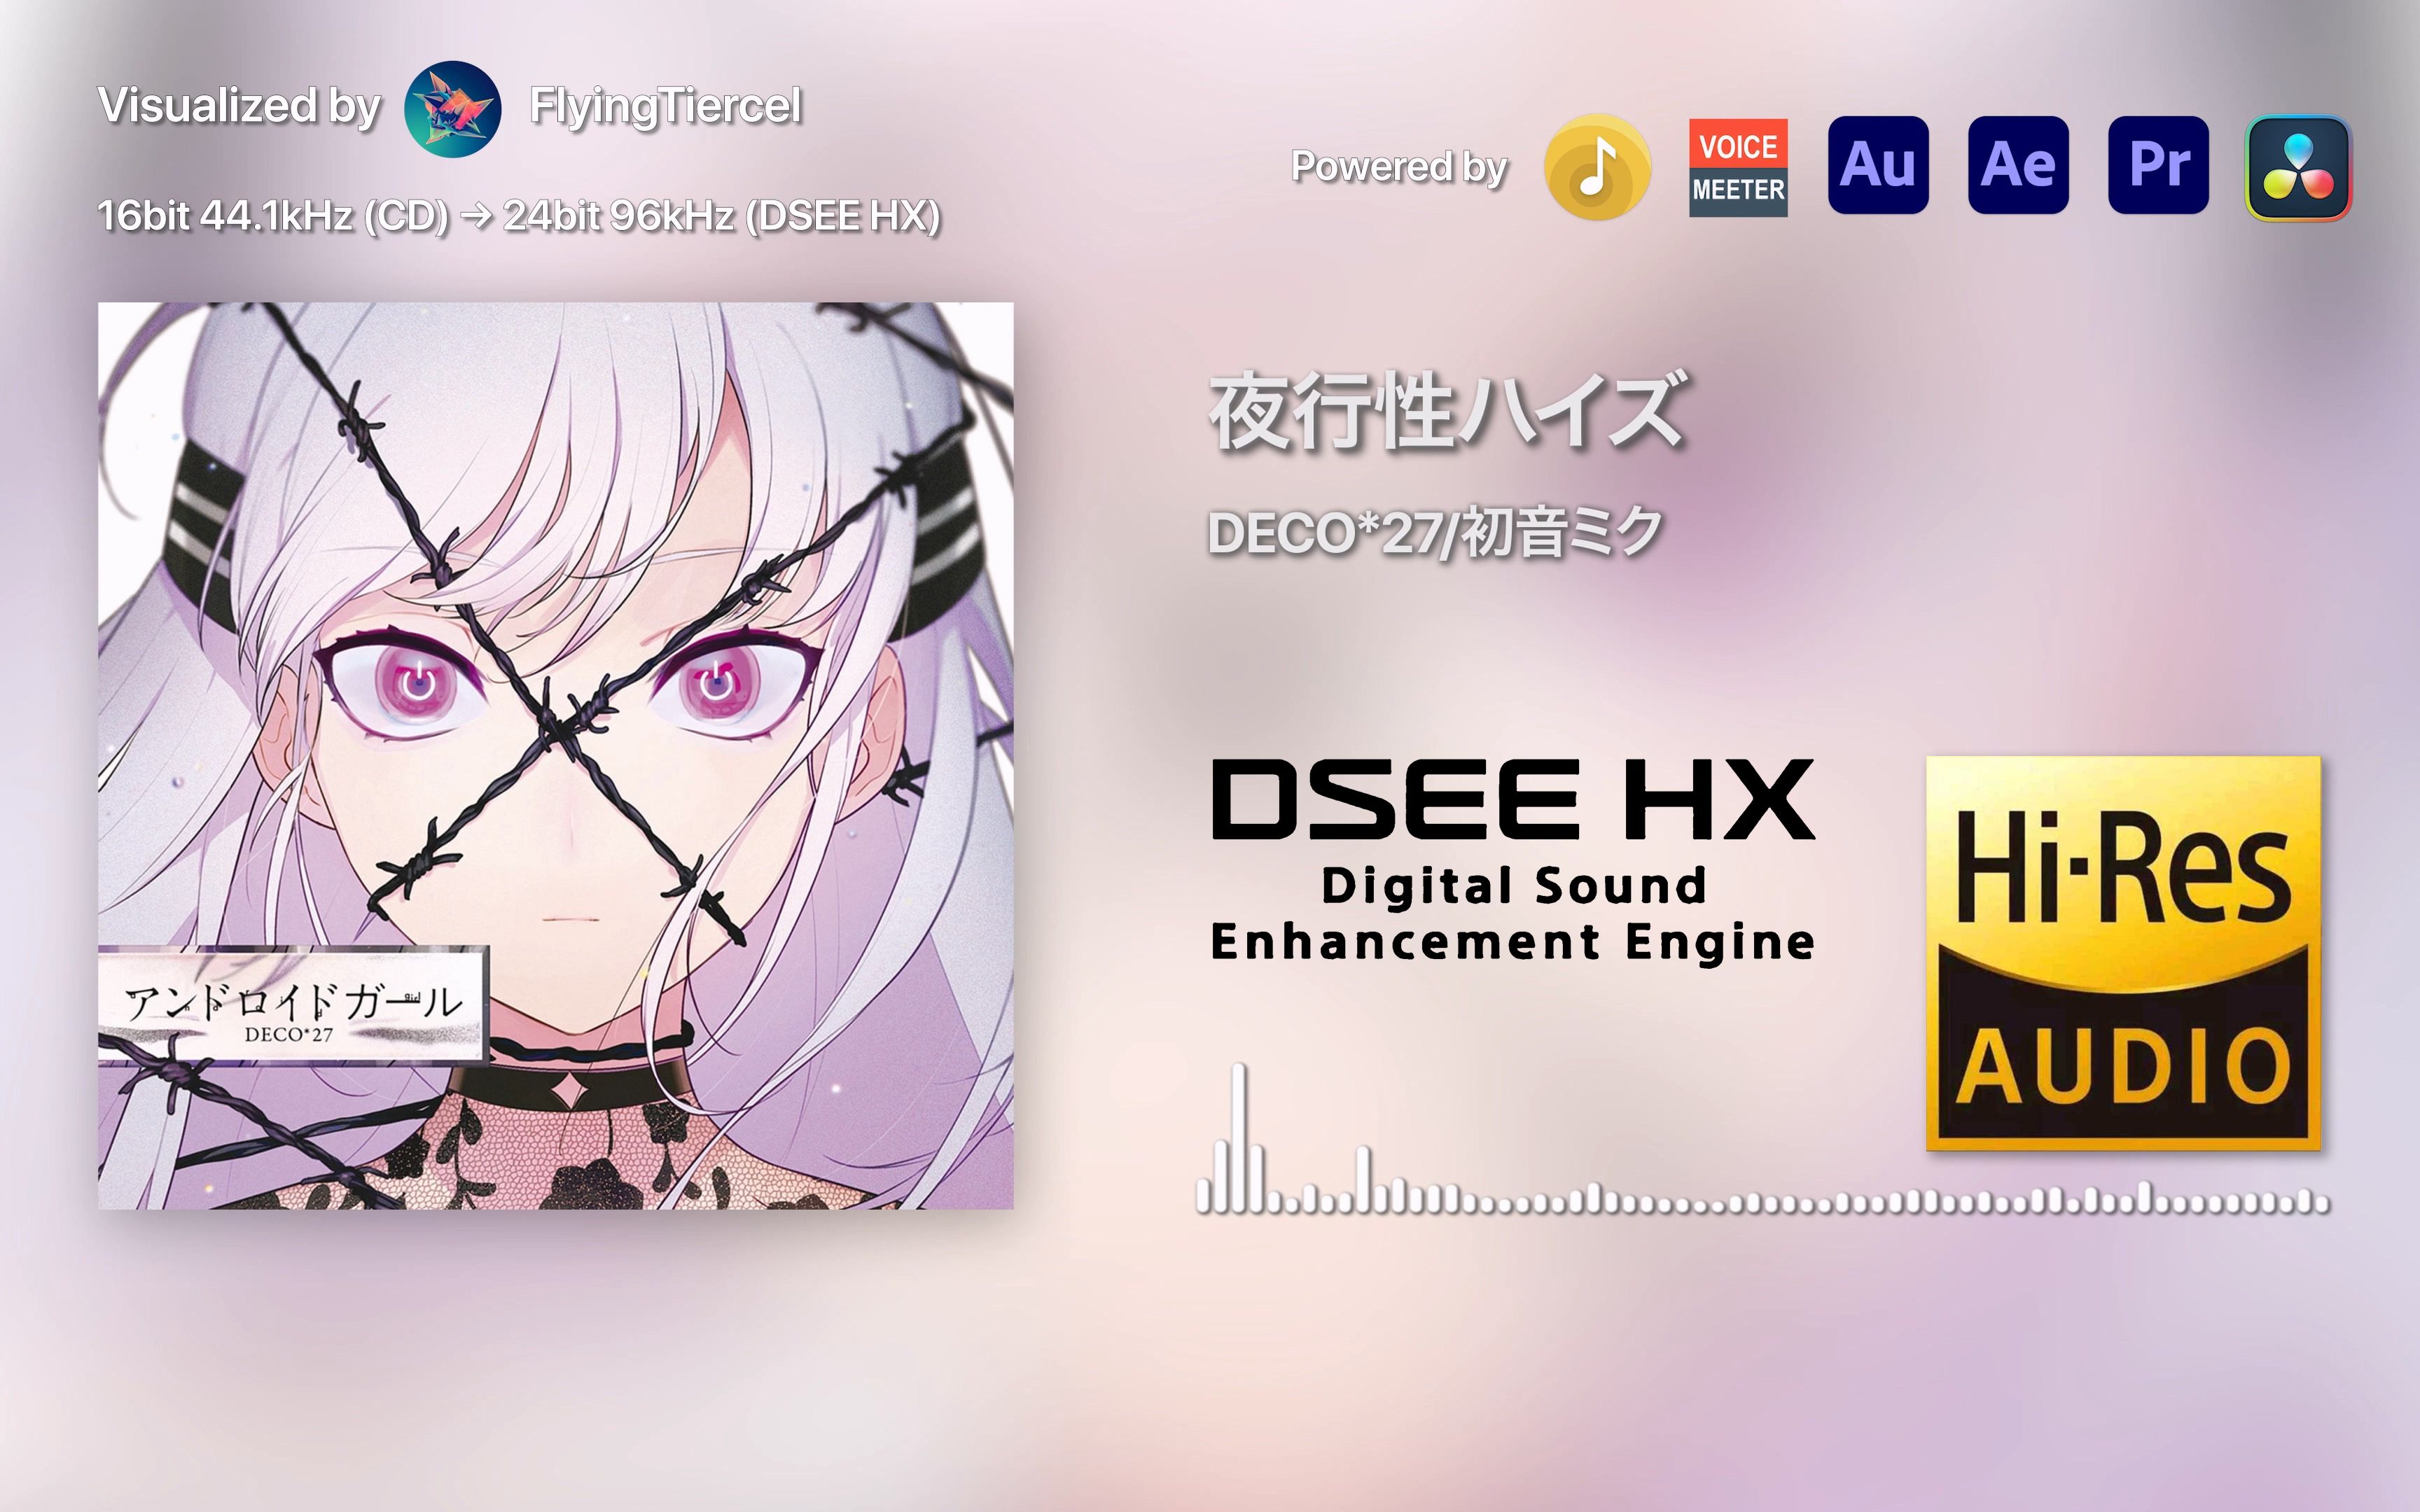 [4K Hi-Res] 夜行性ハイズ（夜行性孩子）-DECO*27/初音ミク [24bit/96kHz by DSEE HX] 音频可视化